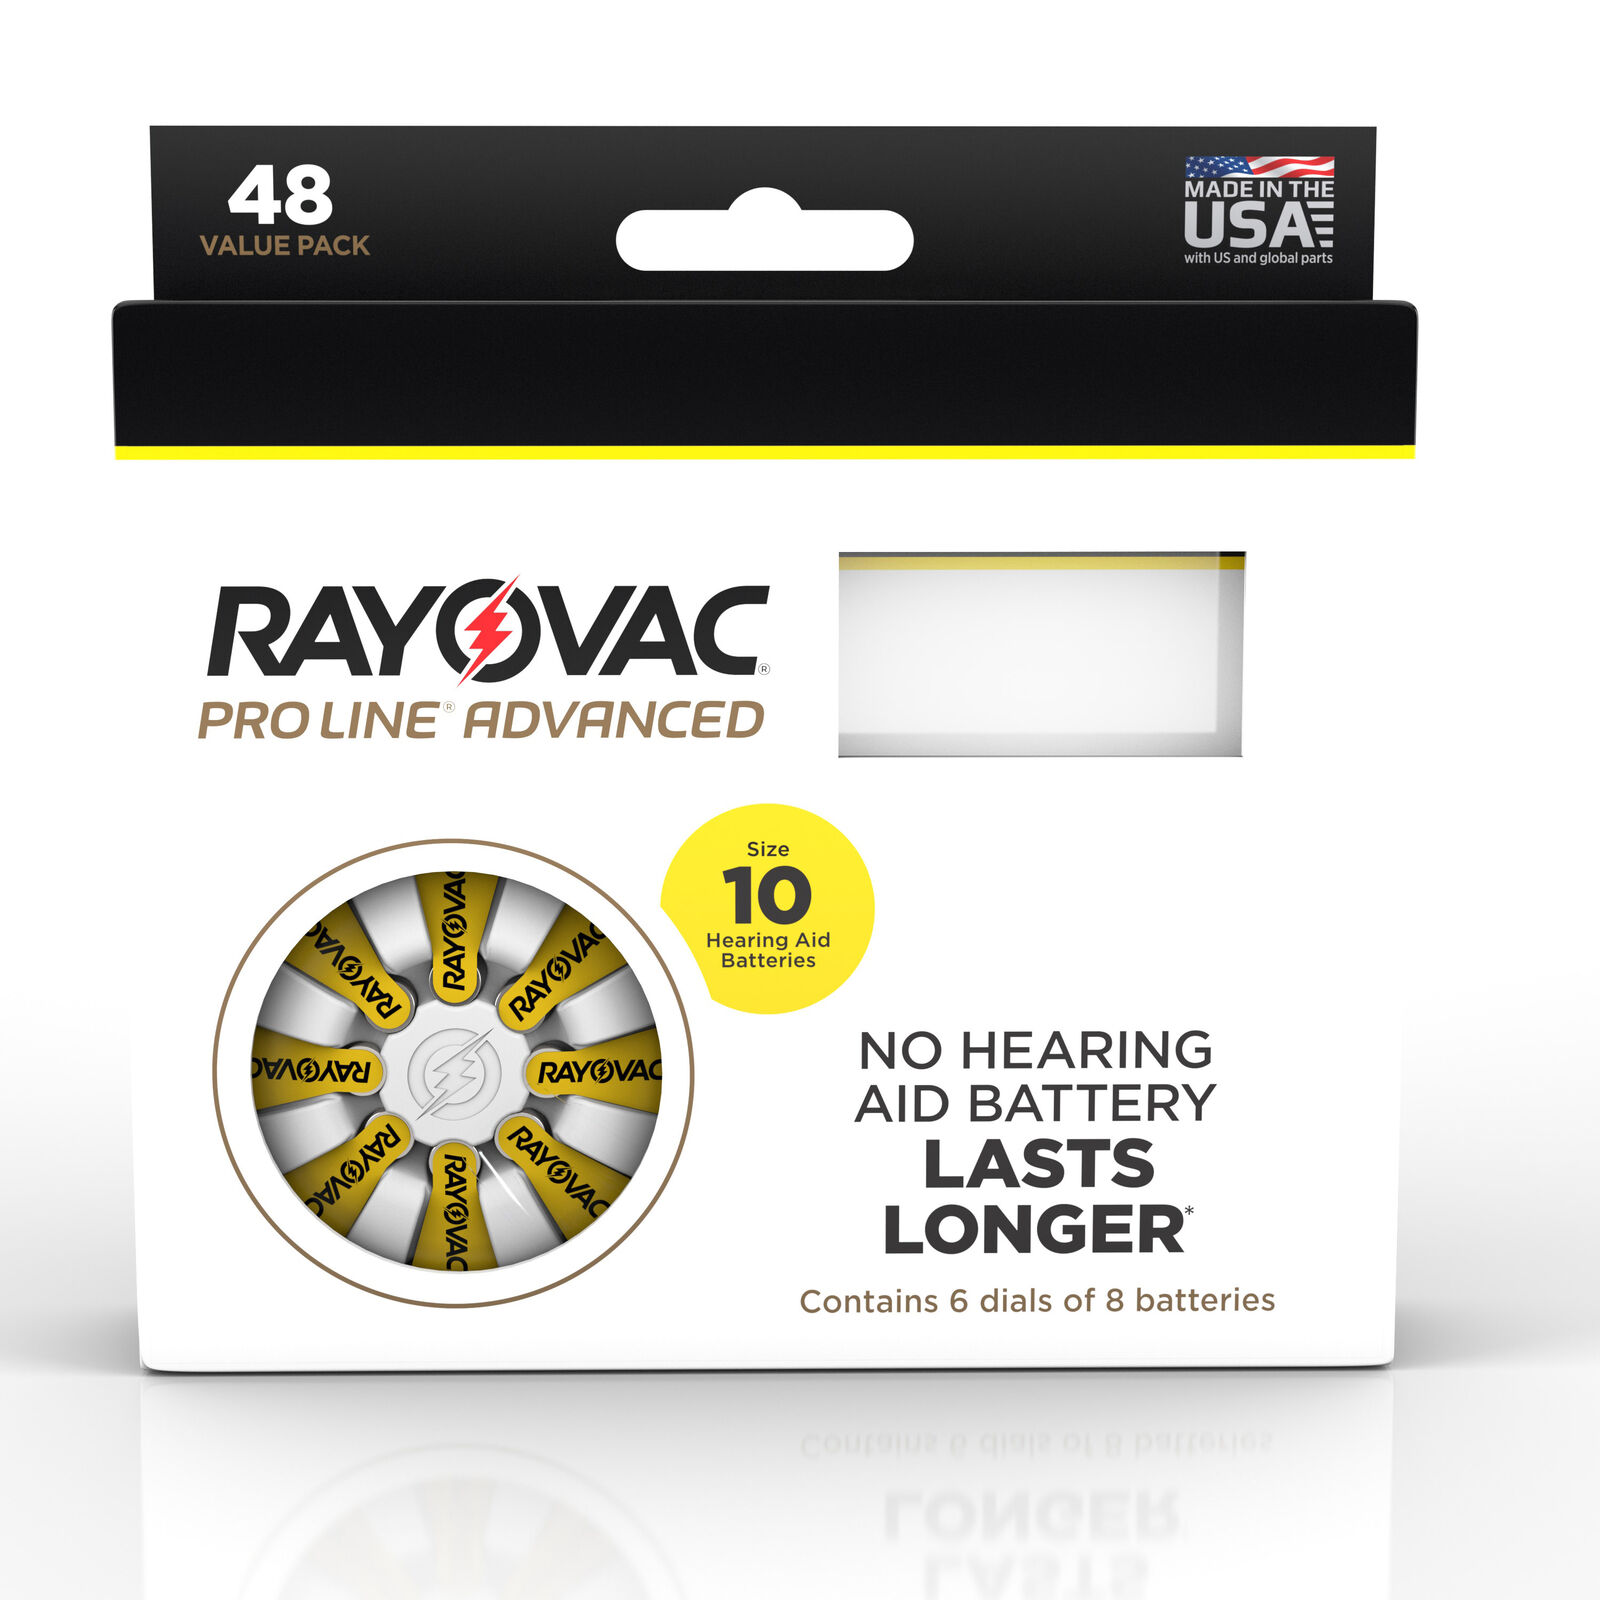 Rayovac Proline Advanced Size 10 Hearing Aid Batteries (48 Batteries)